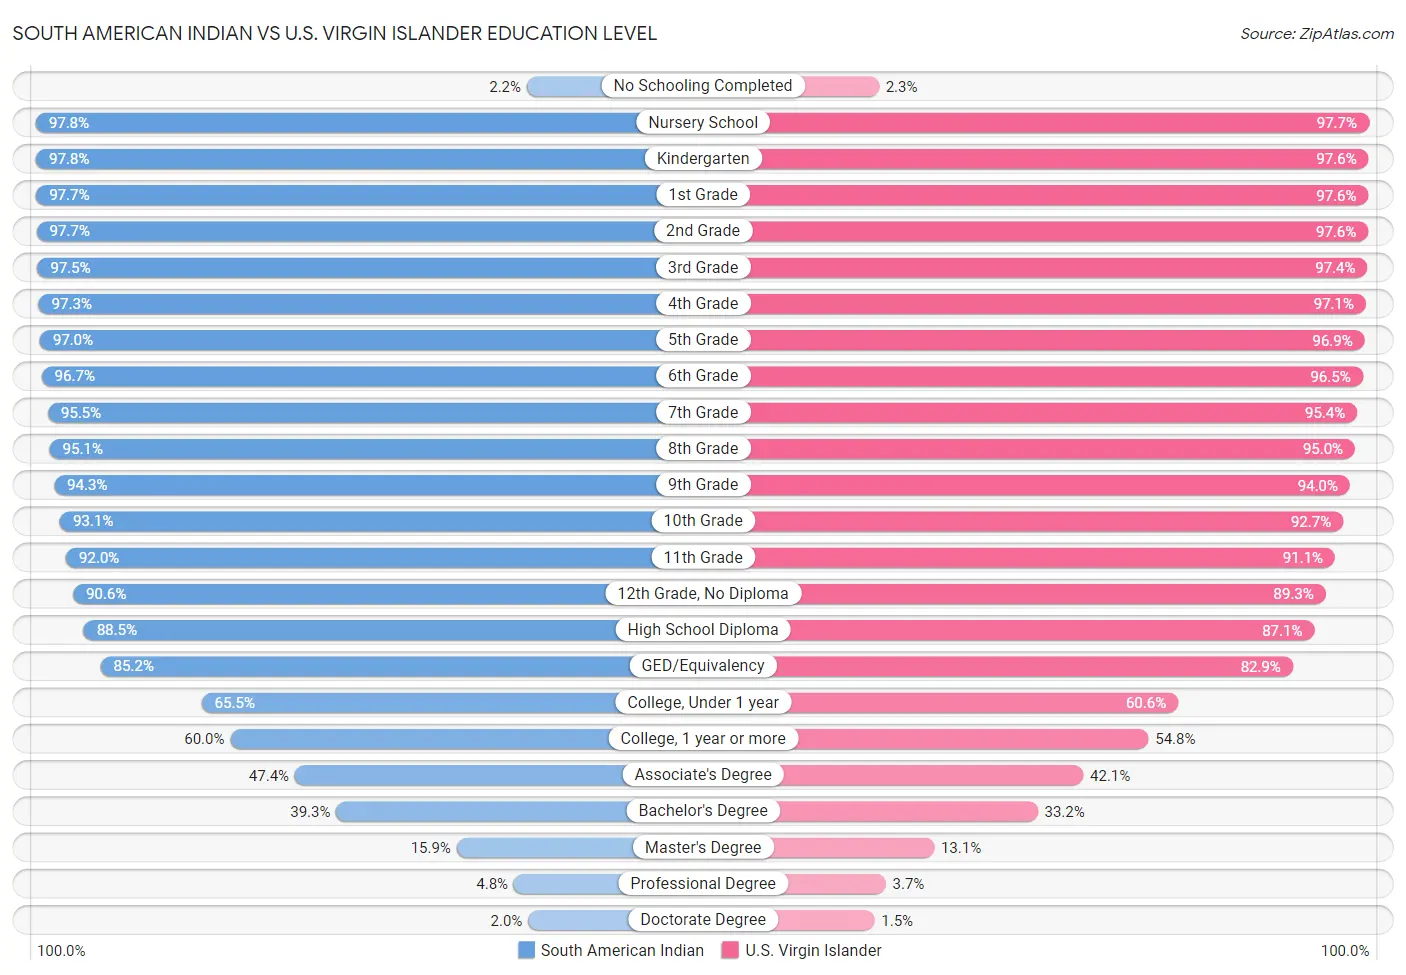 South American Indian vs U.S. Virgin Islander Education Level